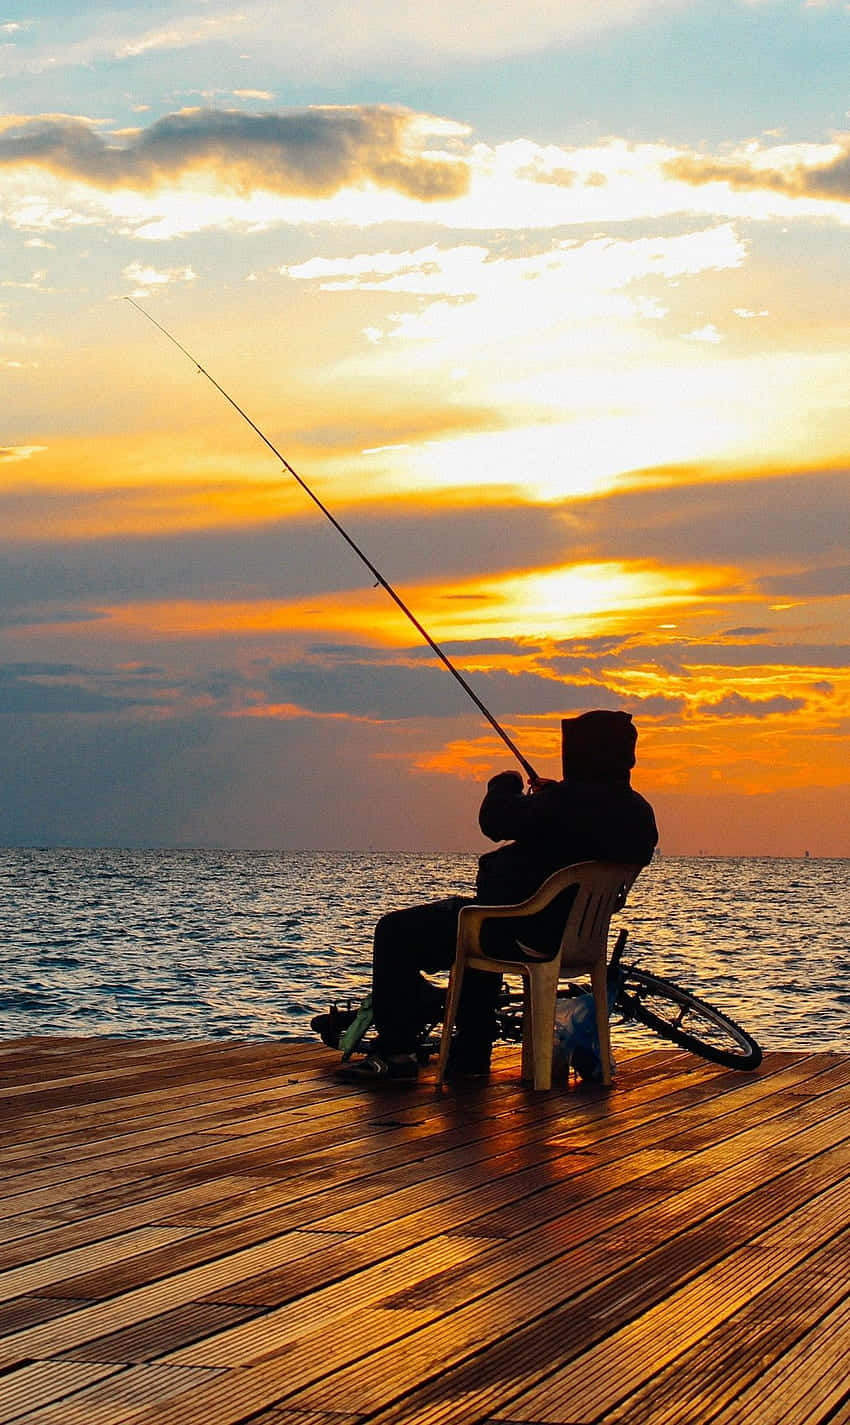 Angler's Dream - Fishing rod ready for action Wallpaper